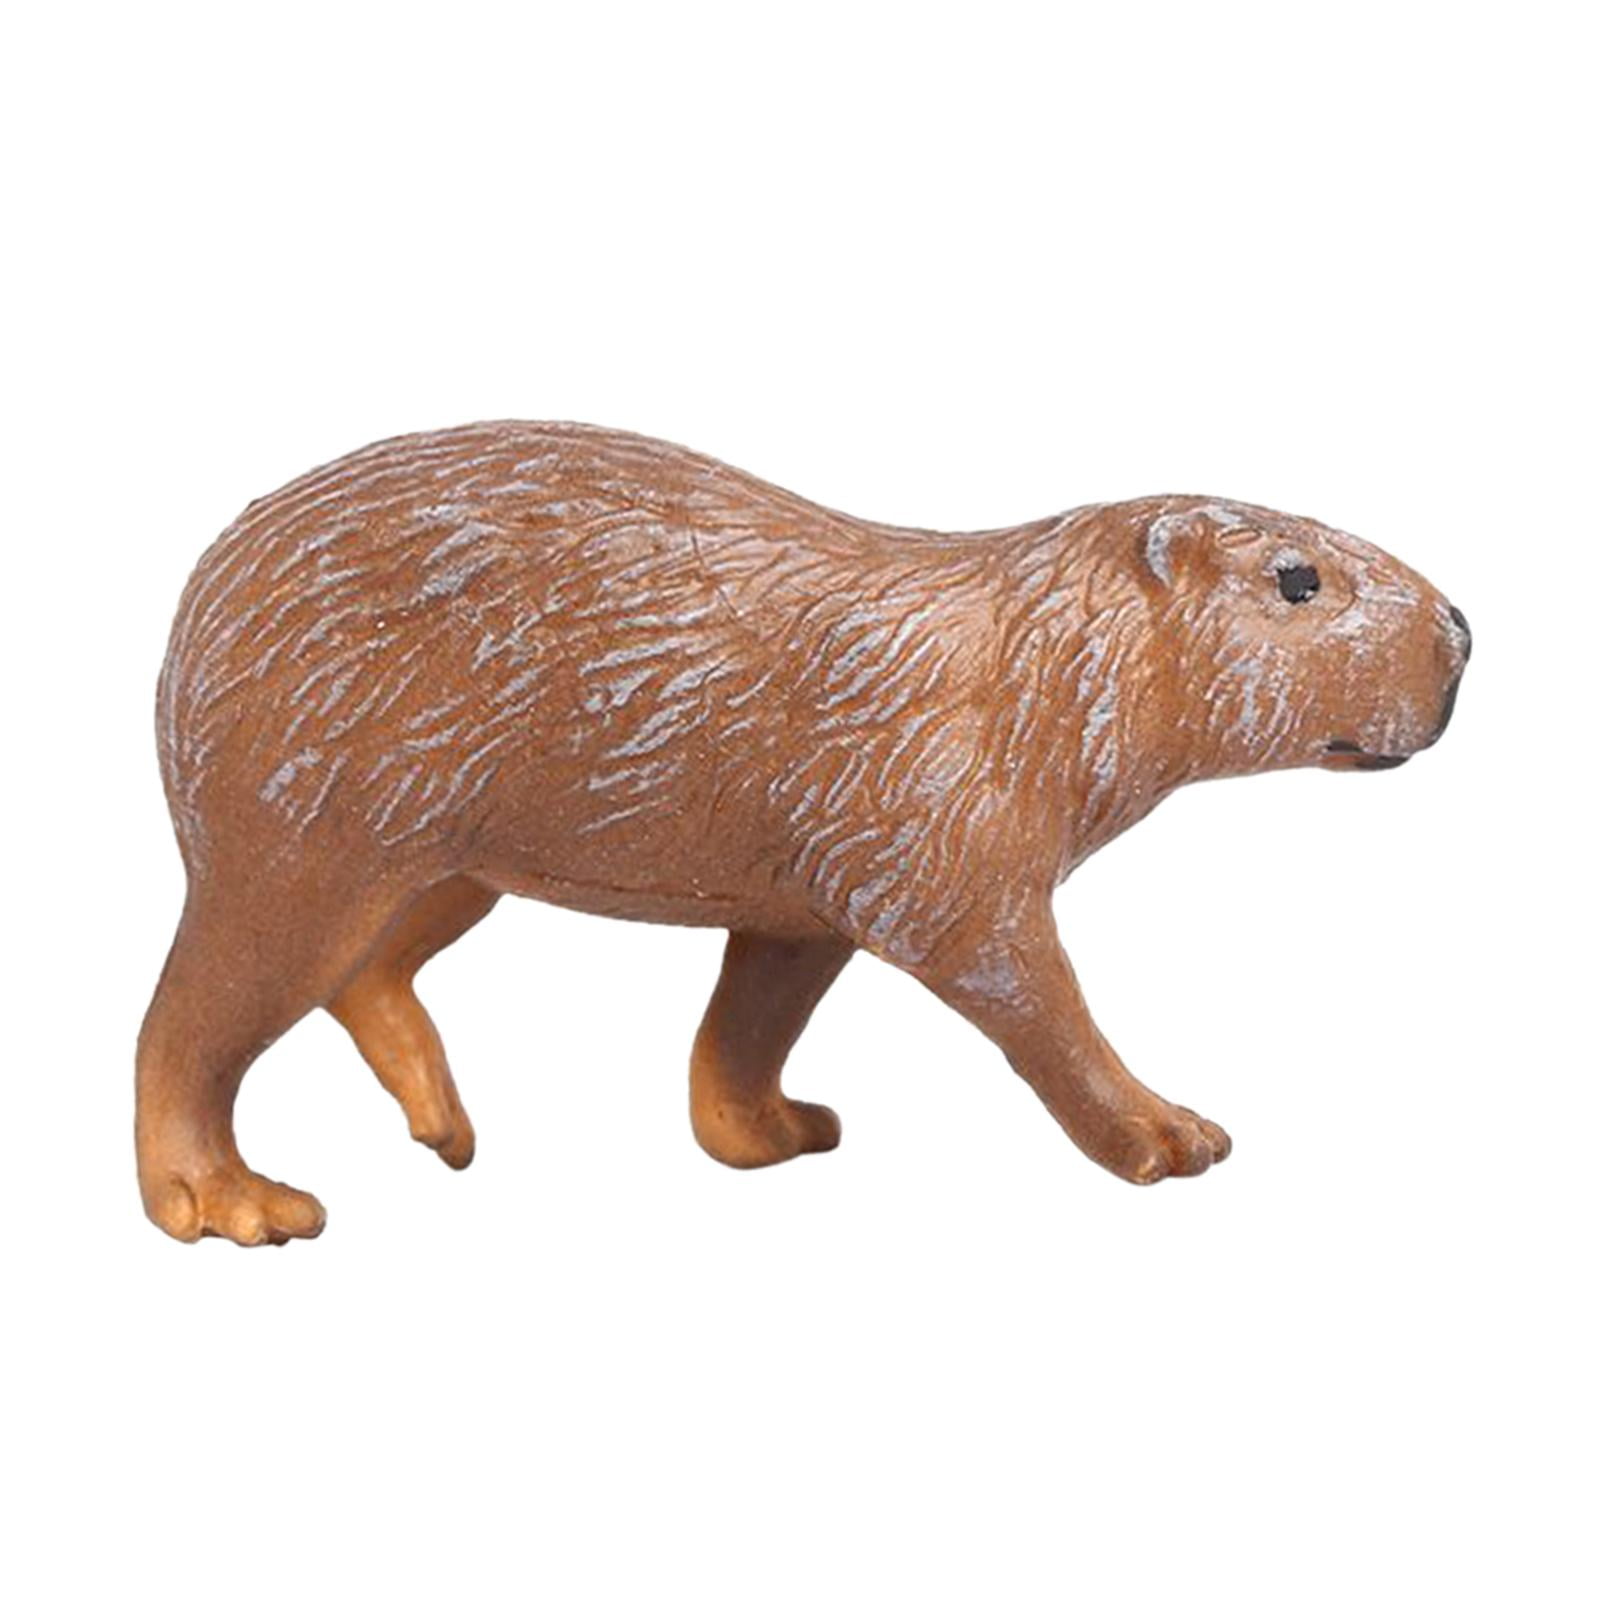 Small Capybara Figurine, Cartoon Sitting/standing Capybara Toy